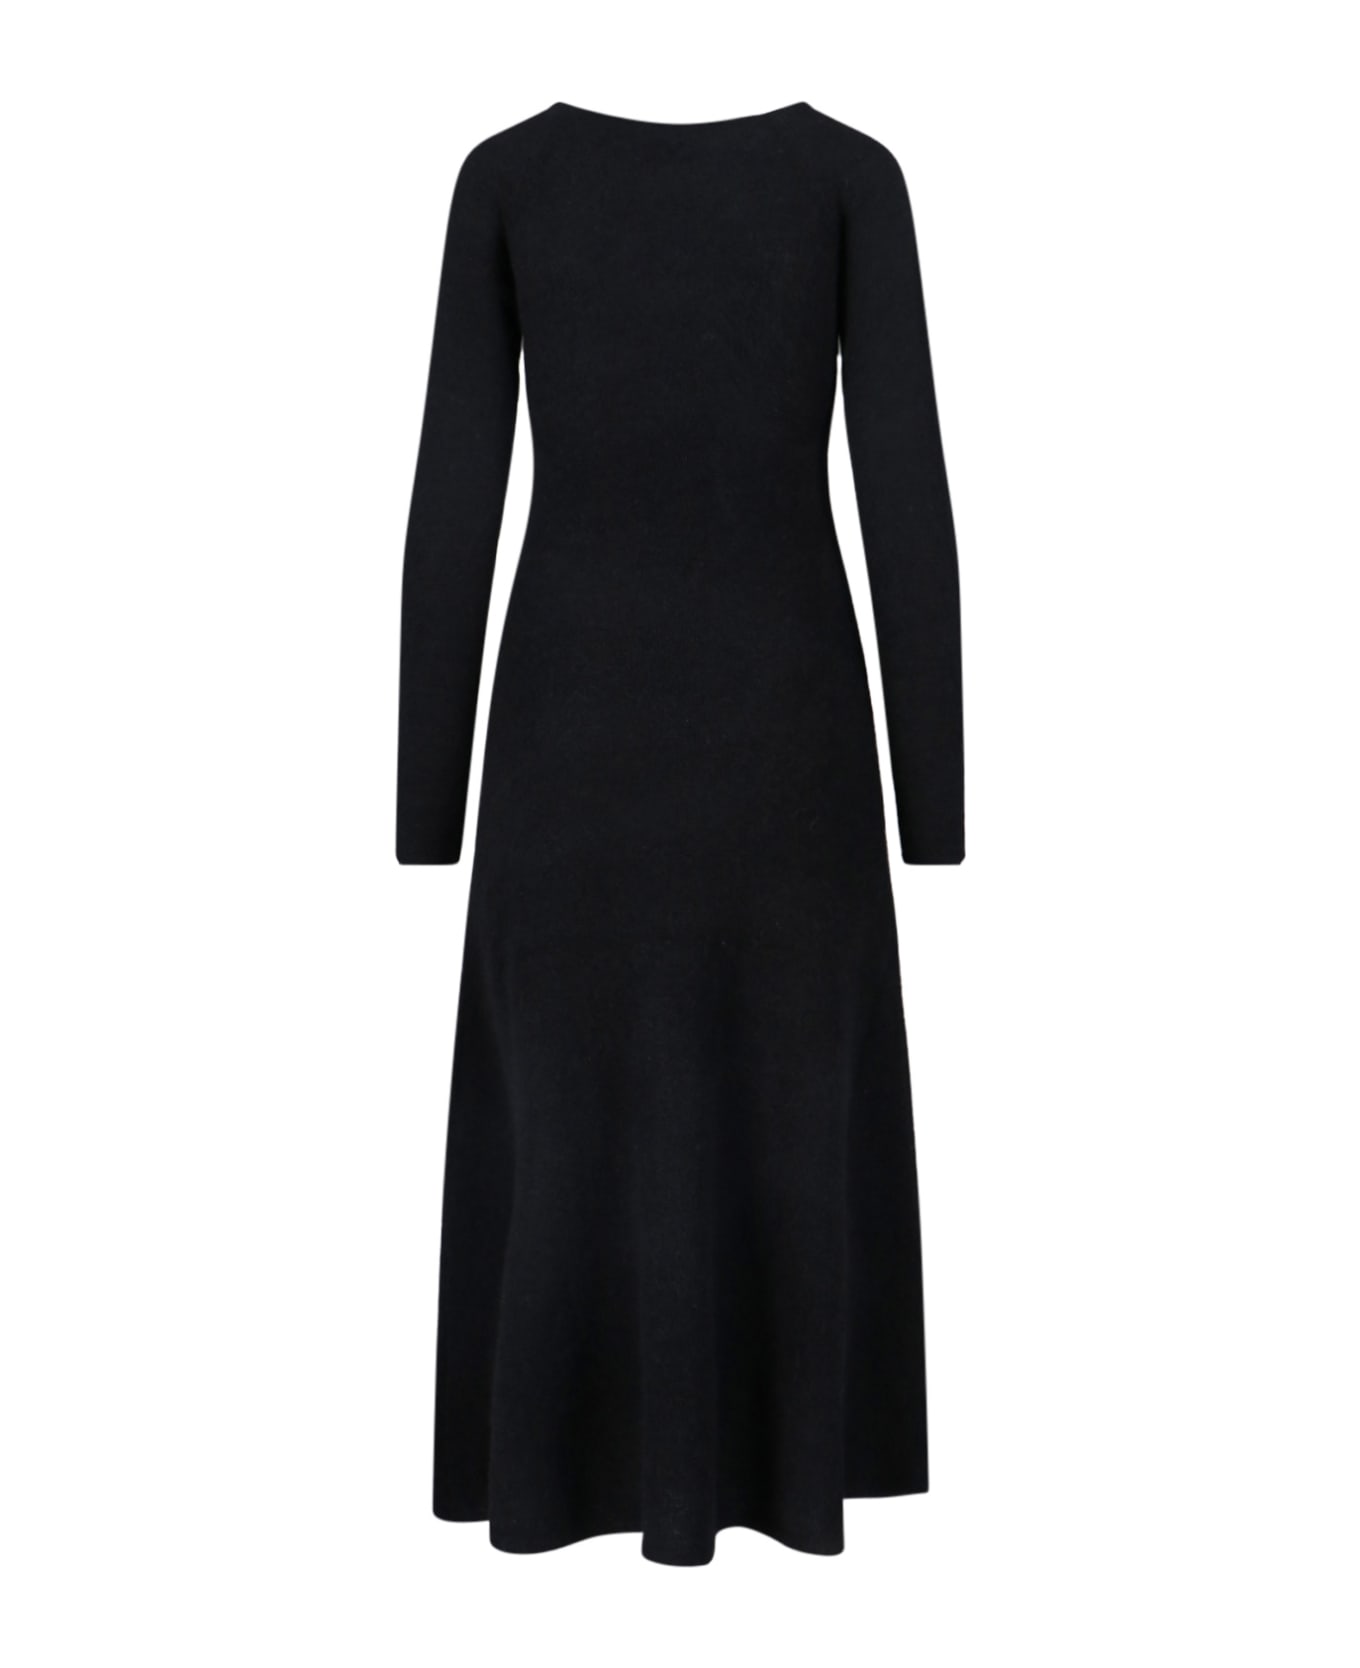 The Garment Dress - Black